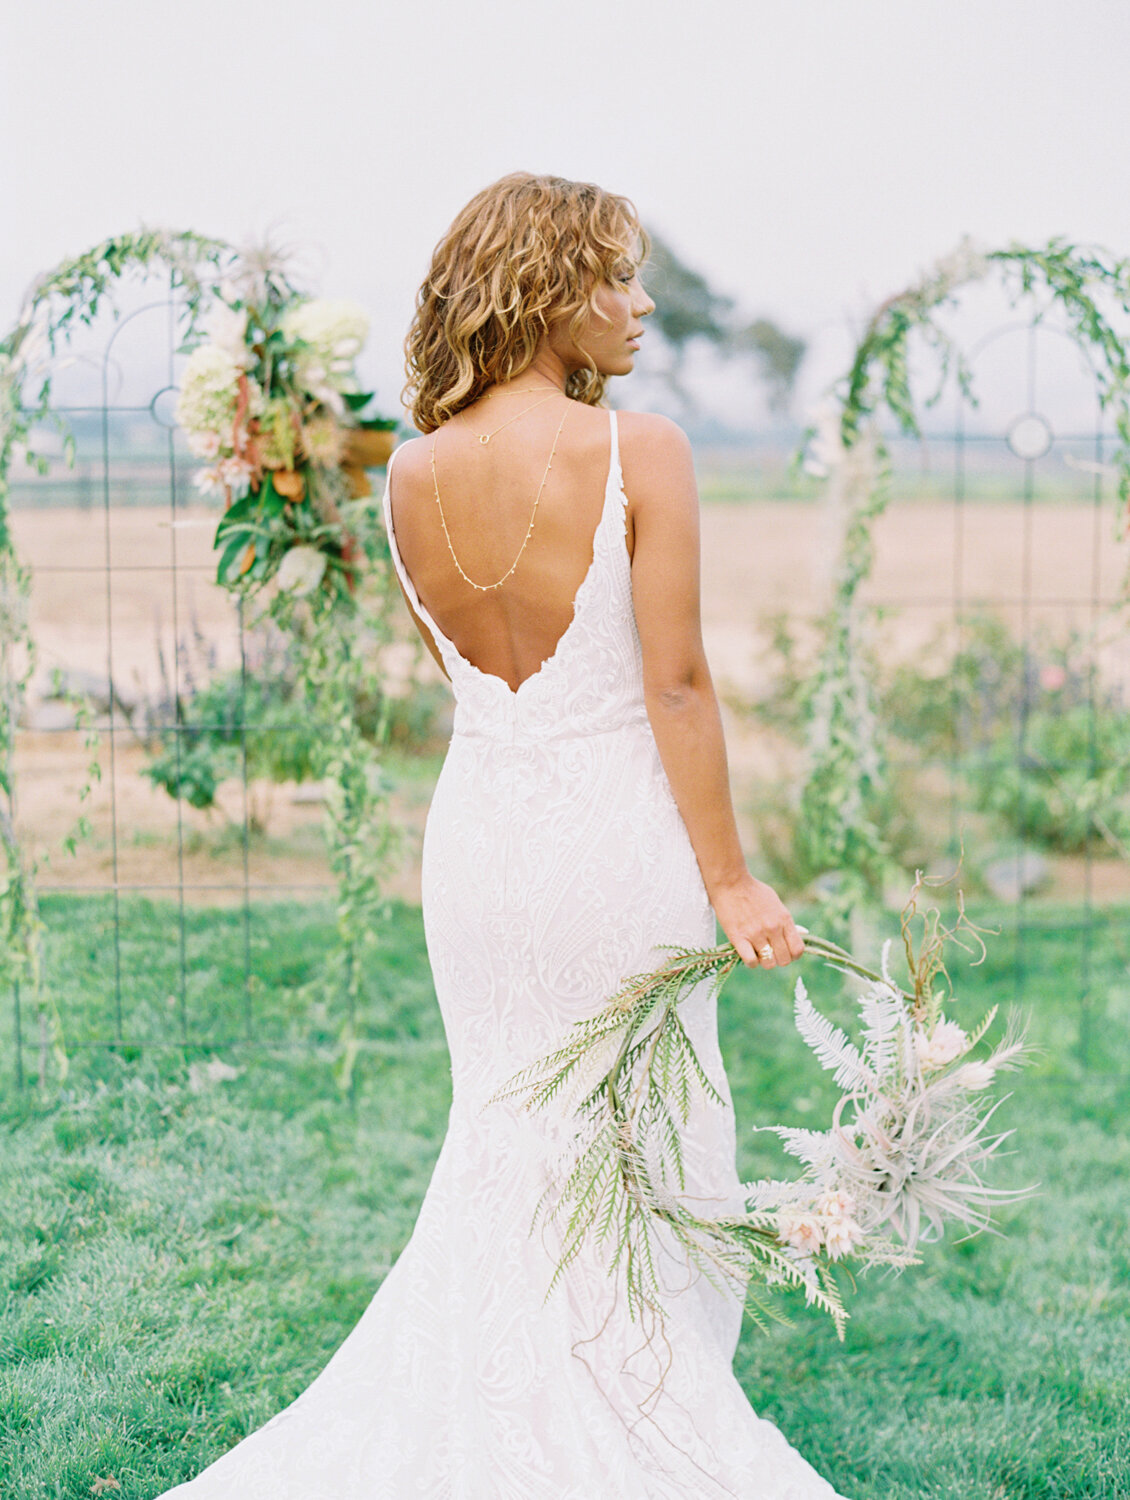 wisteria-photography.com | Wisteria Photography | Intimate Rose Garden Wedding | Santa Ynez | Featured on Green Wedding Shoes | Southern California Photographer-12.jpg